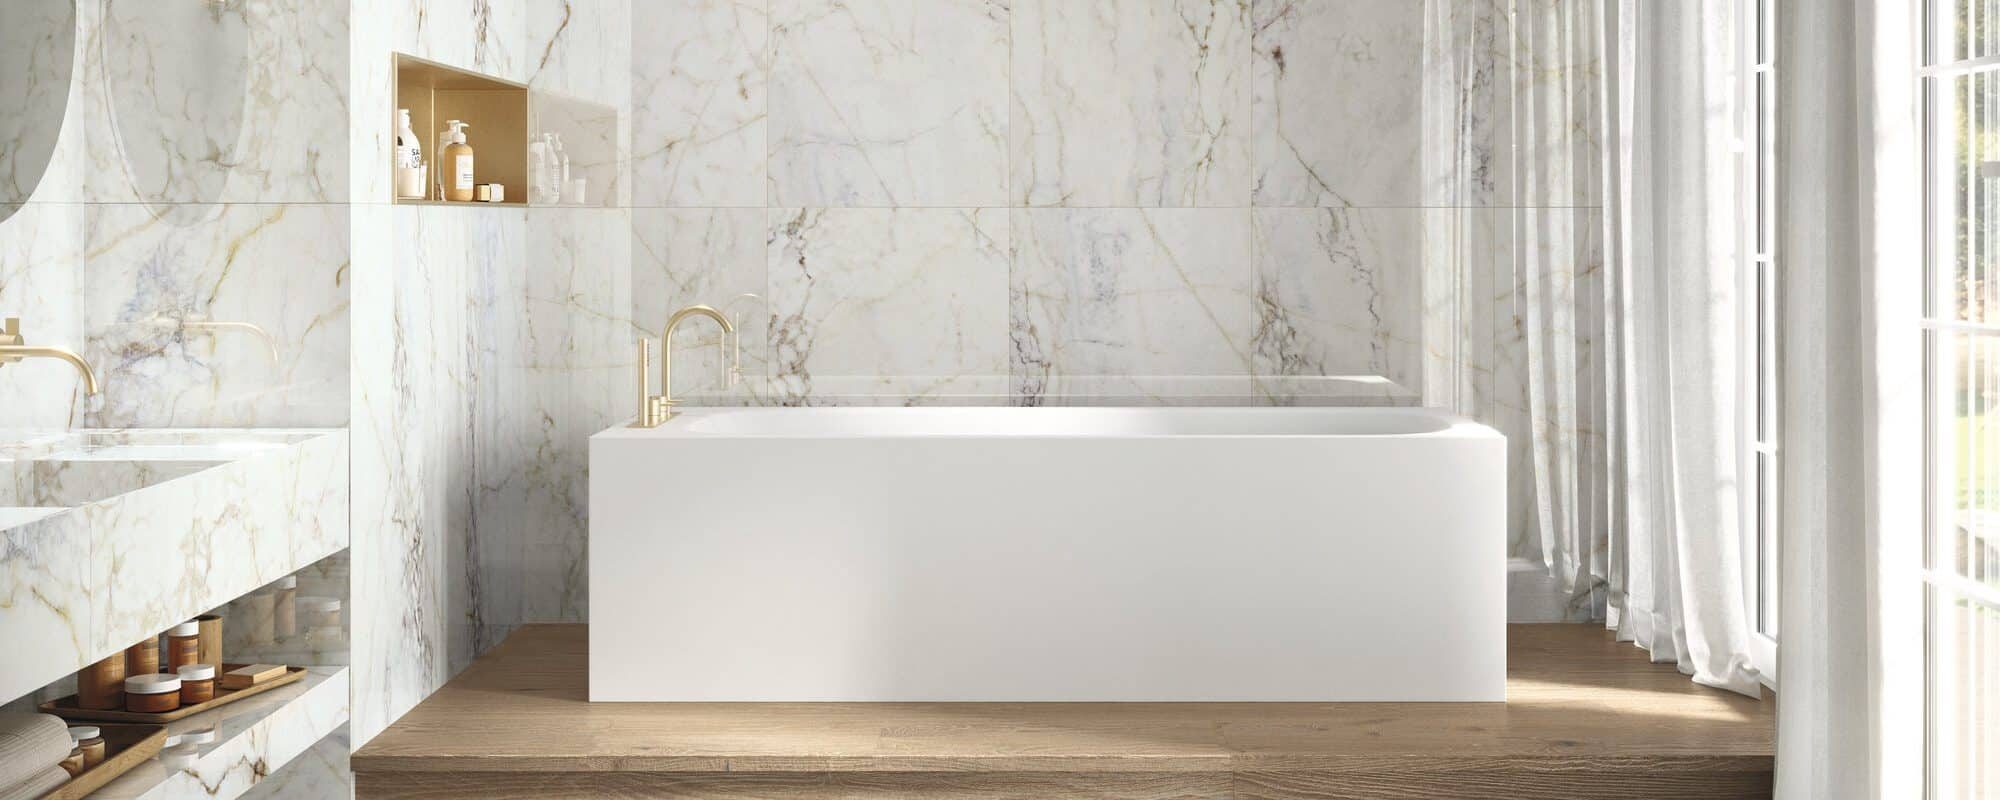 oxyd-marble effect bathroom tiles london slider 2